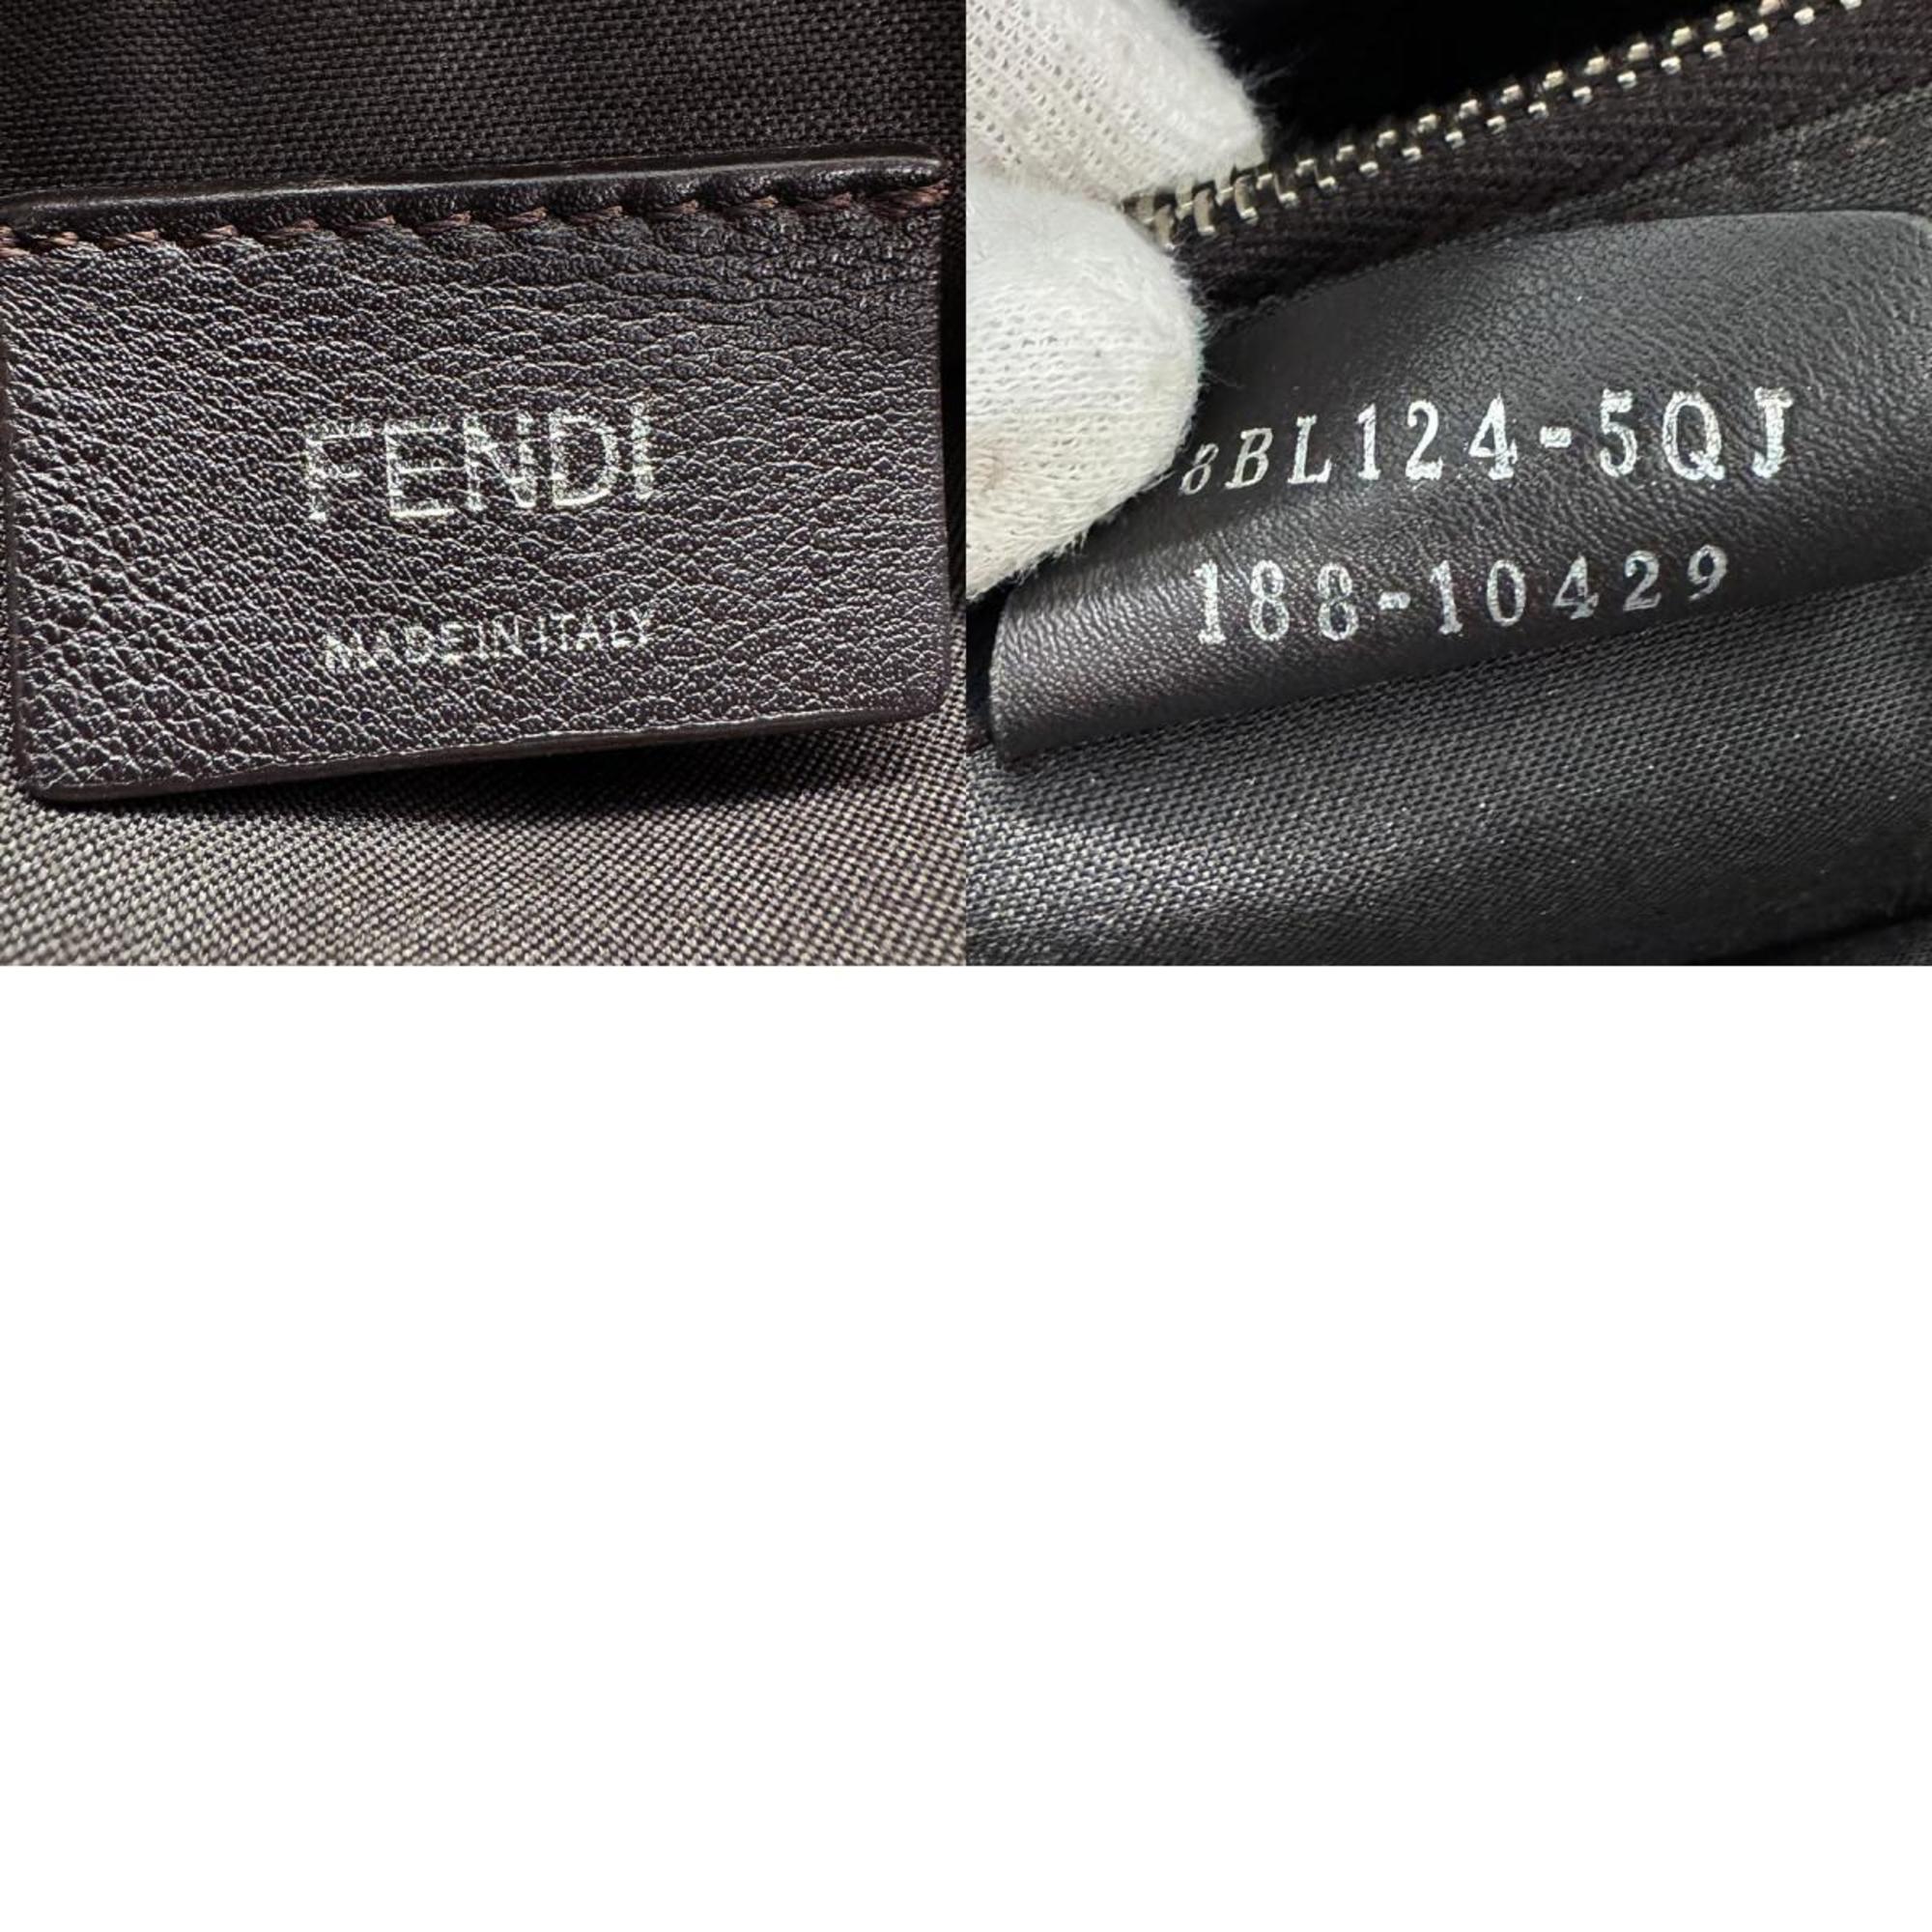 FENDI Shoulder Bag Handbag By The Way Medium Leather Gray x Black Women's 8BL124-5QJ z0513